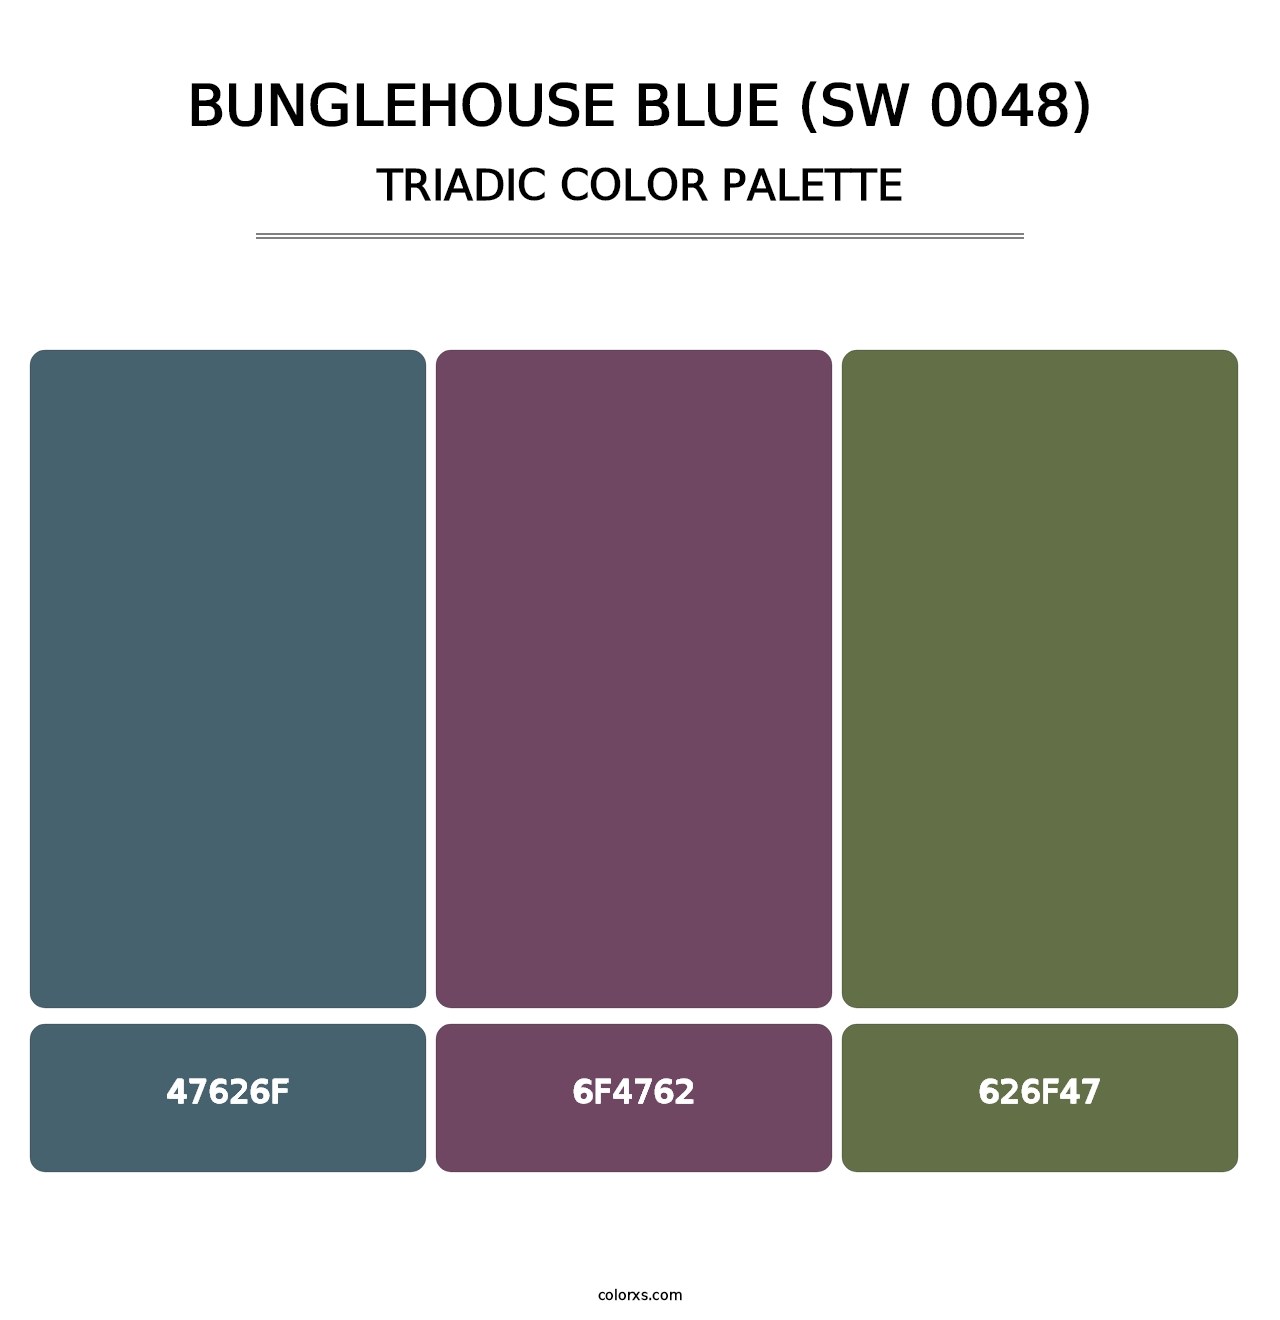 Bunglehouse Blue (SW 0048) - Triadic Color Palette